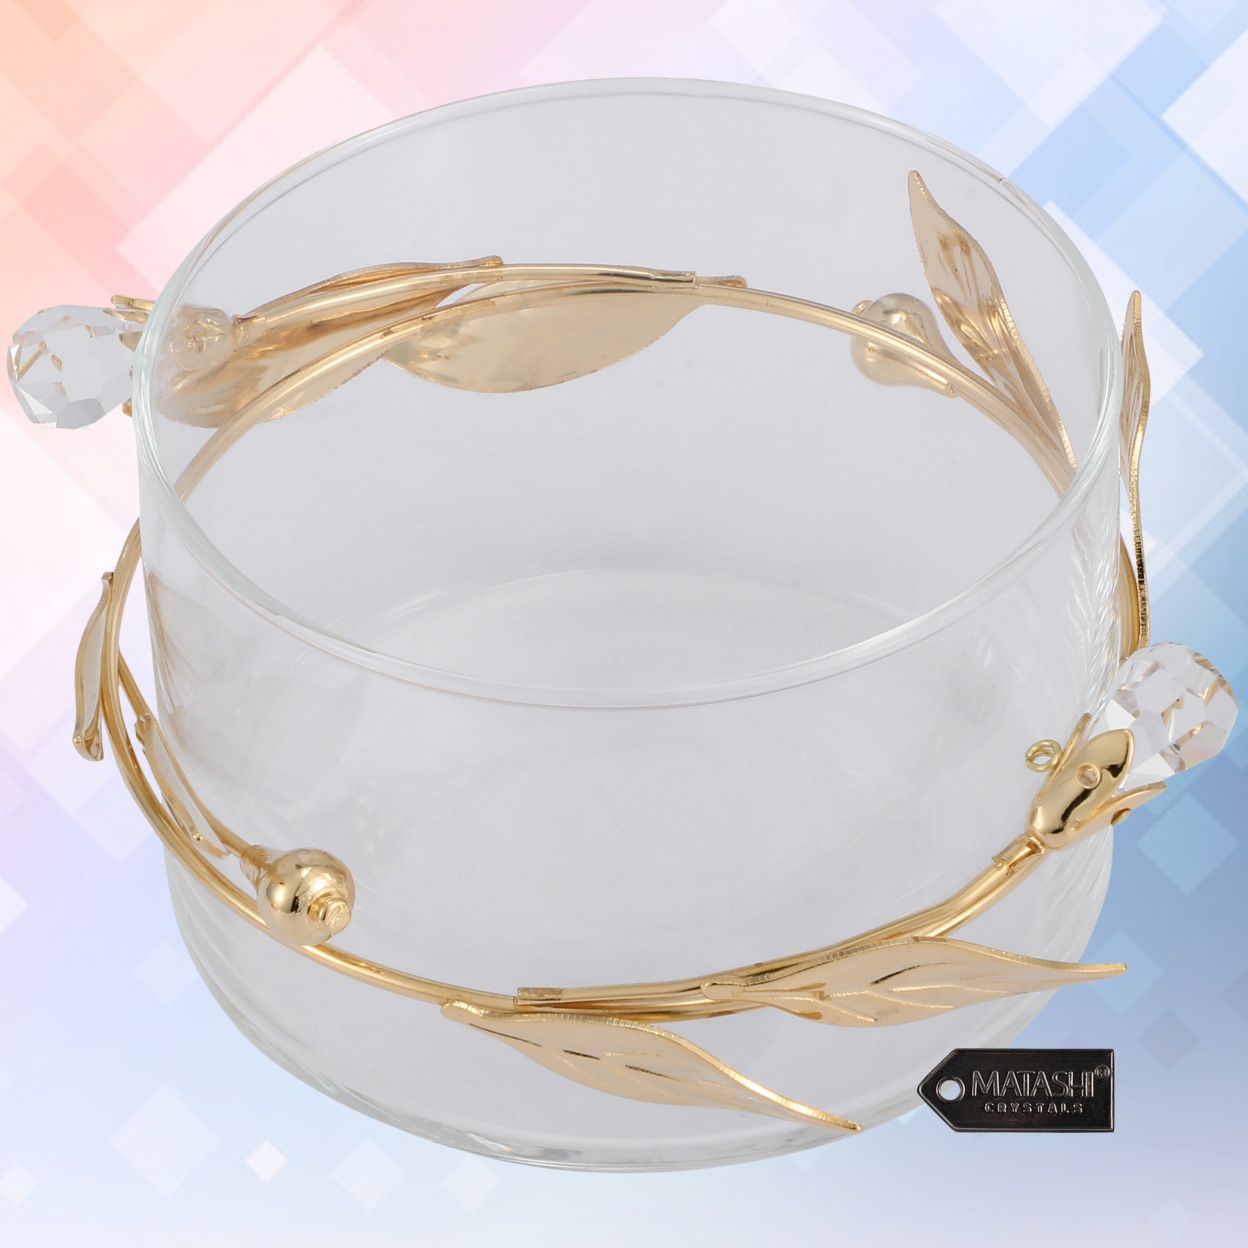 Matashi 24K Gold Plated Sugar Bowl, Honey Dish, Candy Dish Glass Bowl Flower & Vine Design W/ Spoon Gift For Christmas Weddings